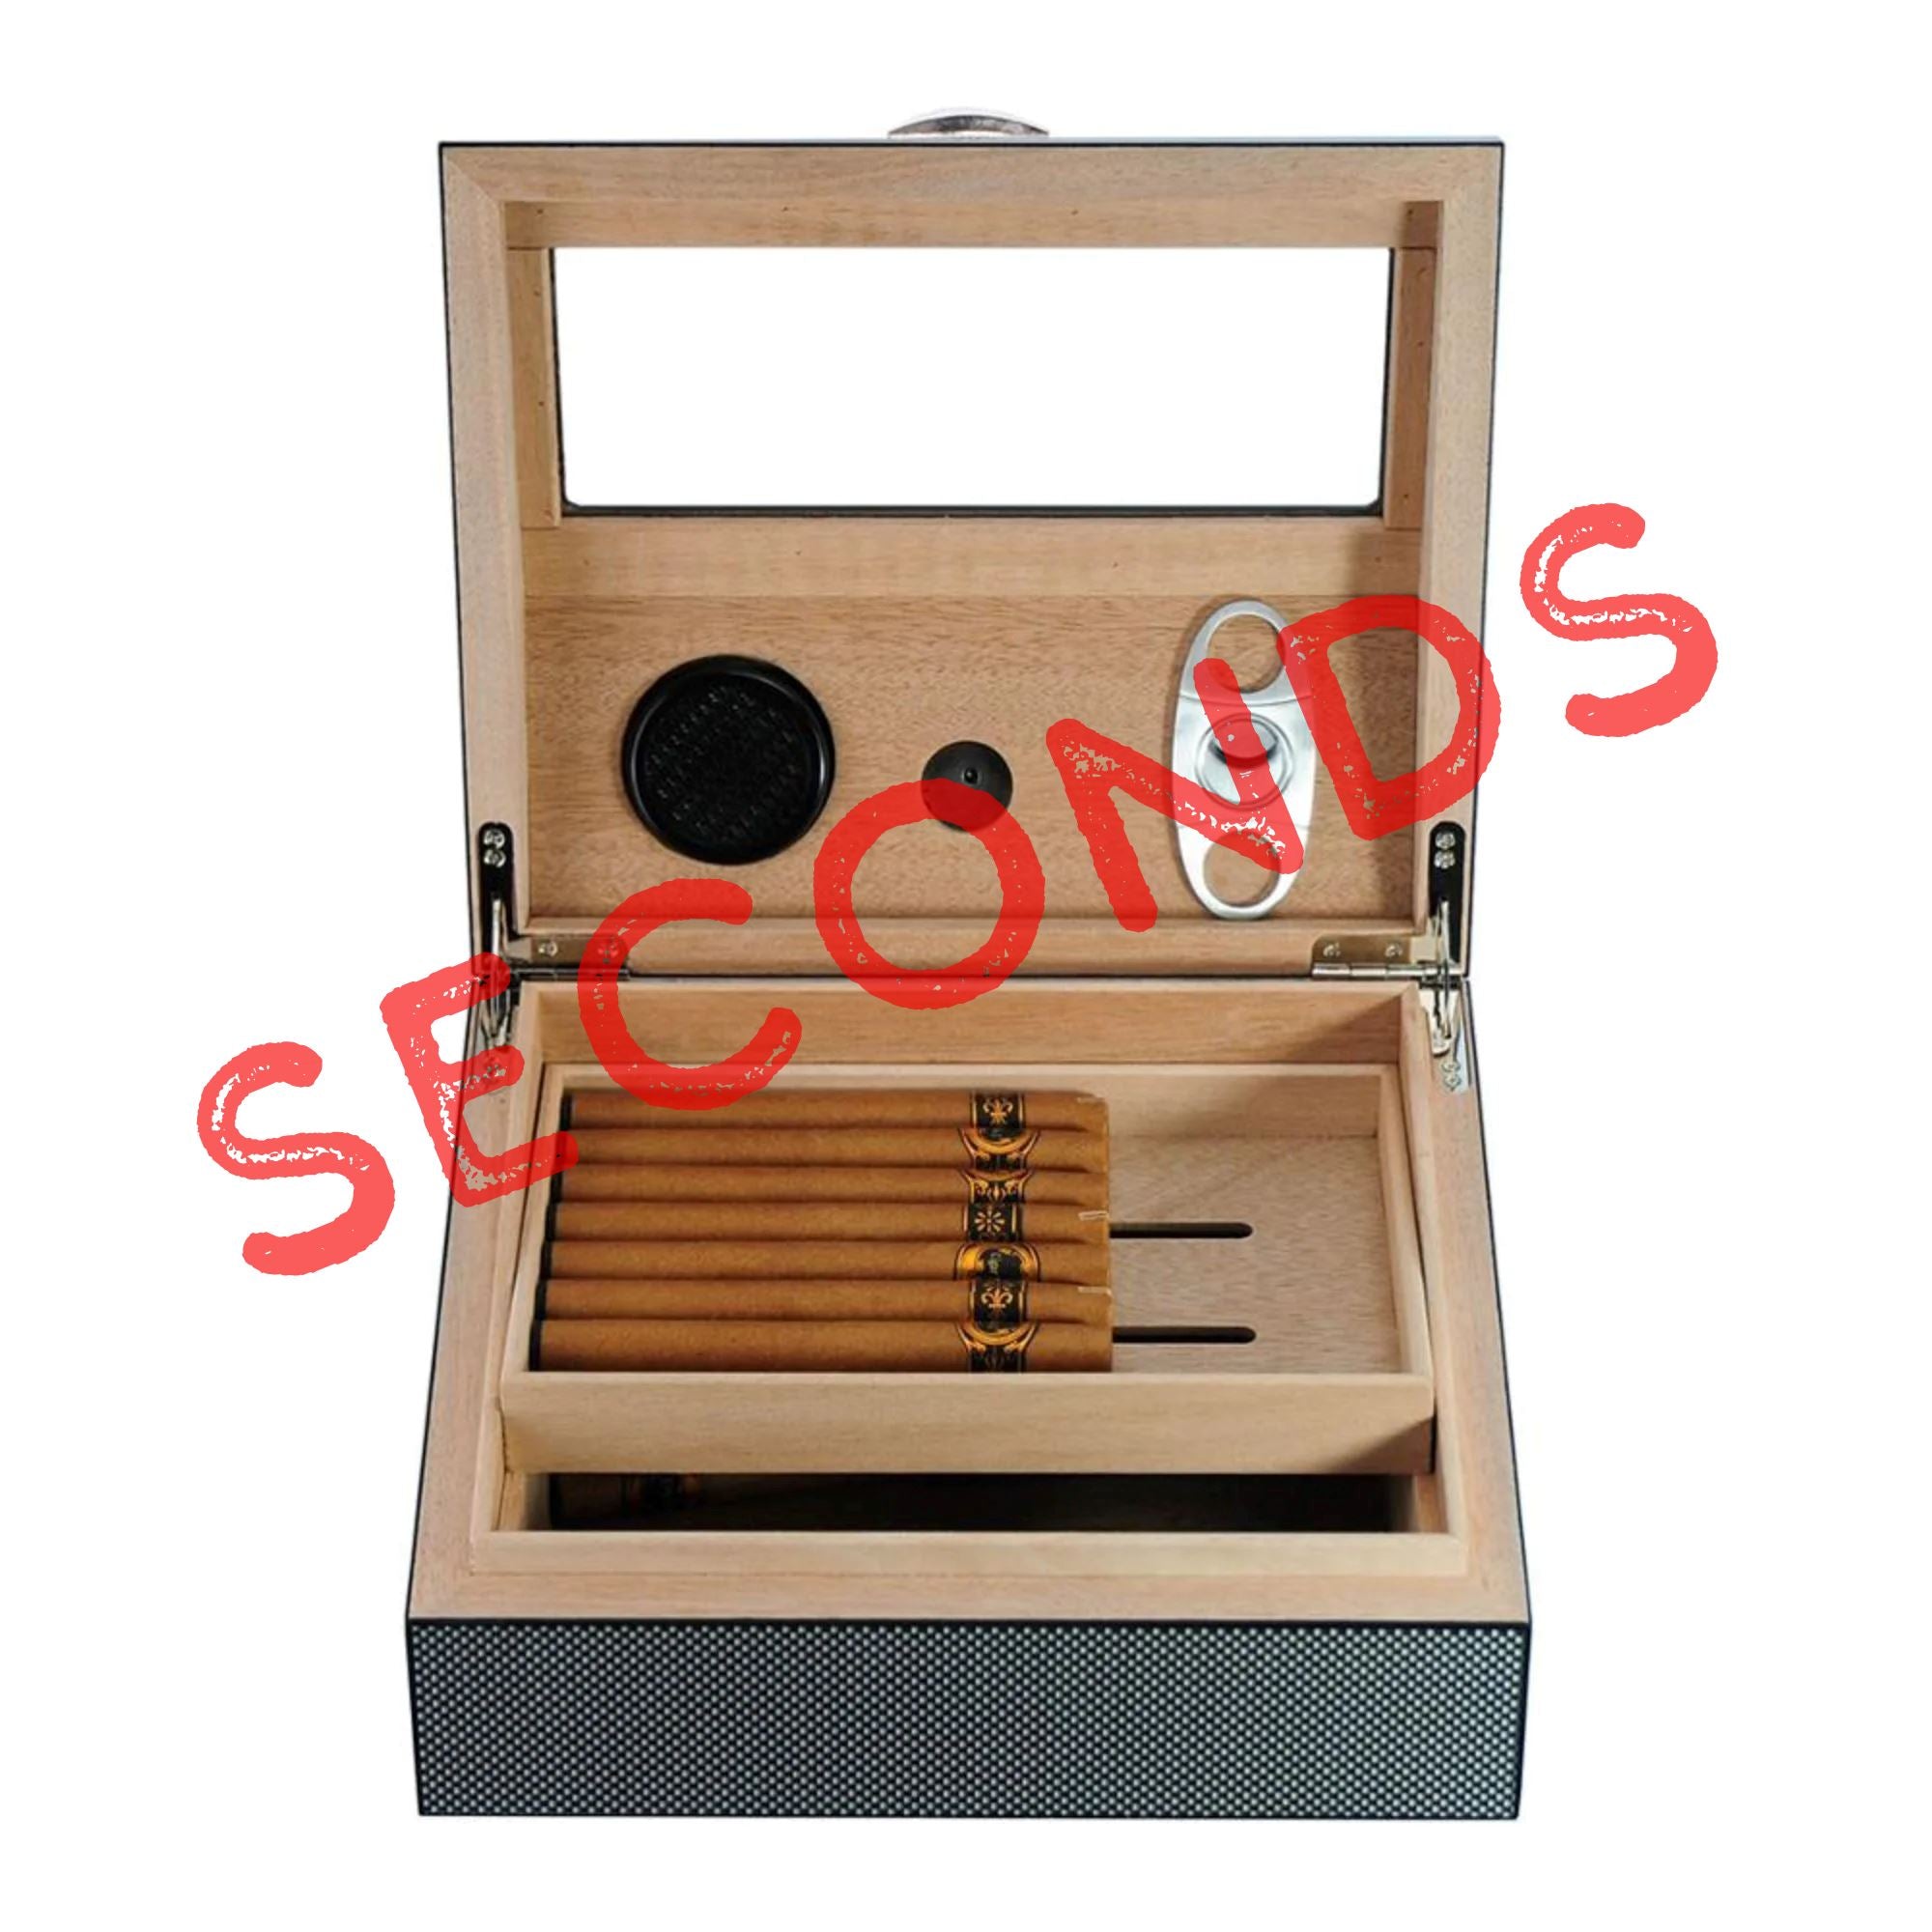 Seconds - 50 CT Carbon Fibre Cigar Humidor Wooden Cabinet for Cigars Seconds Clinks 